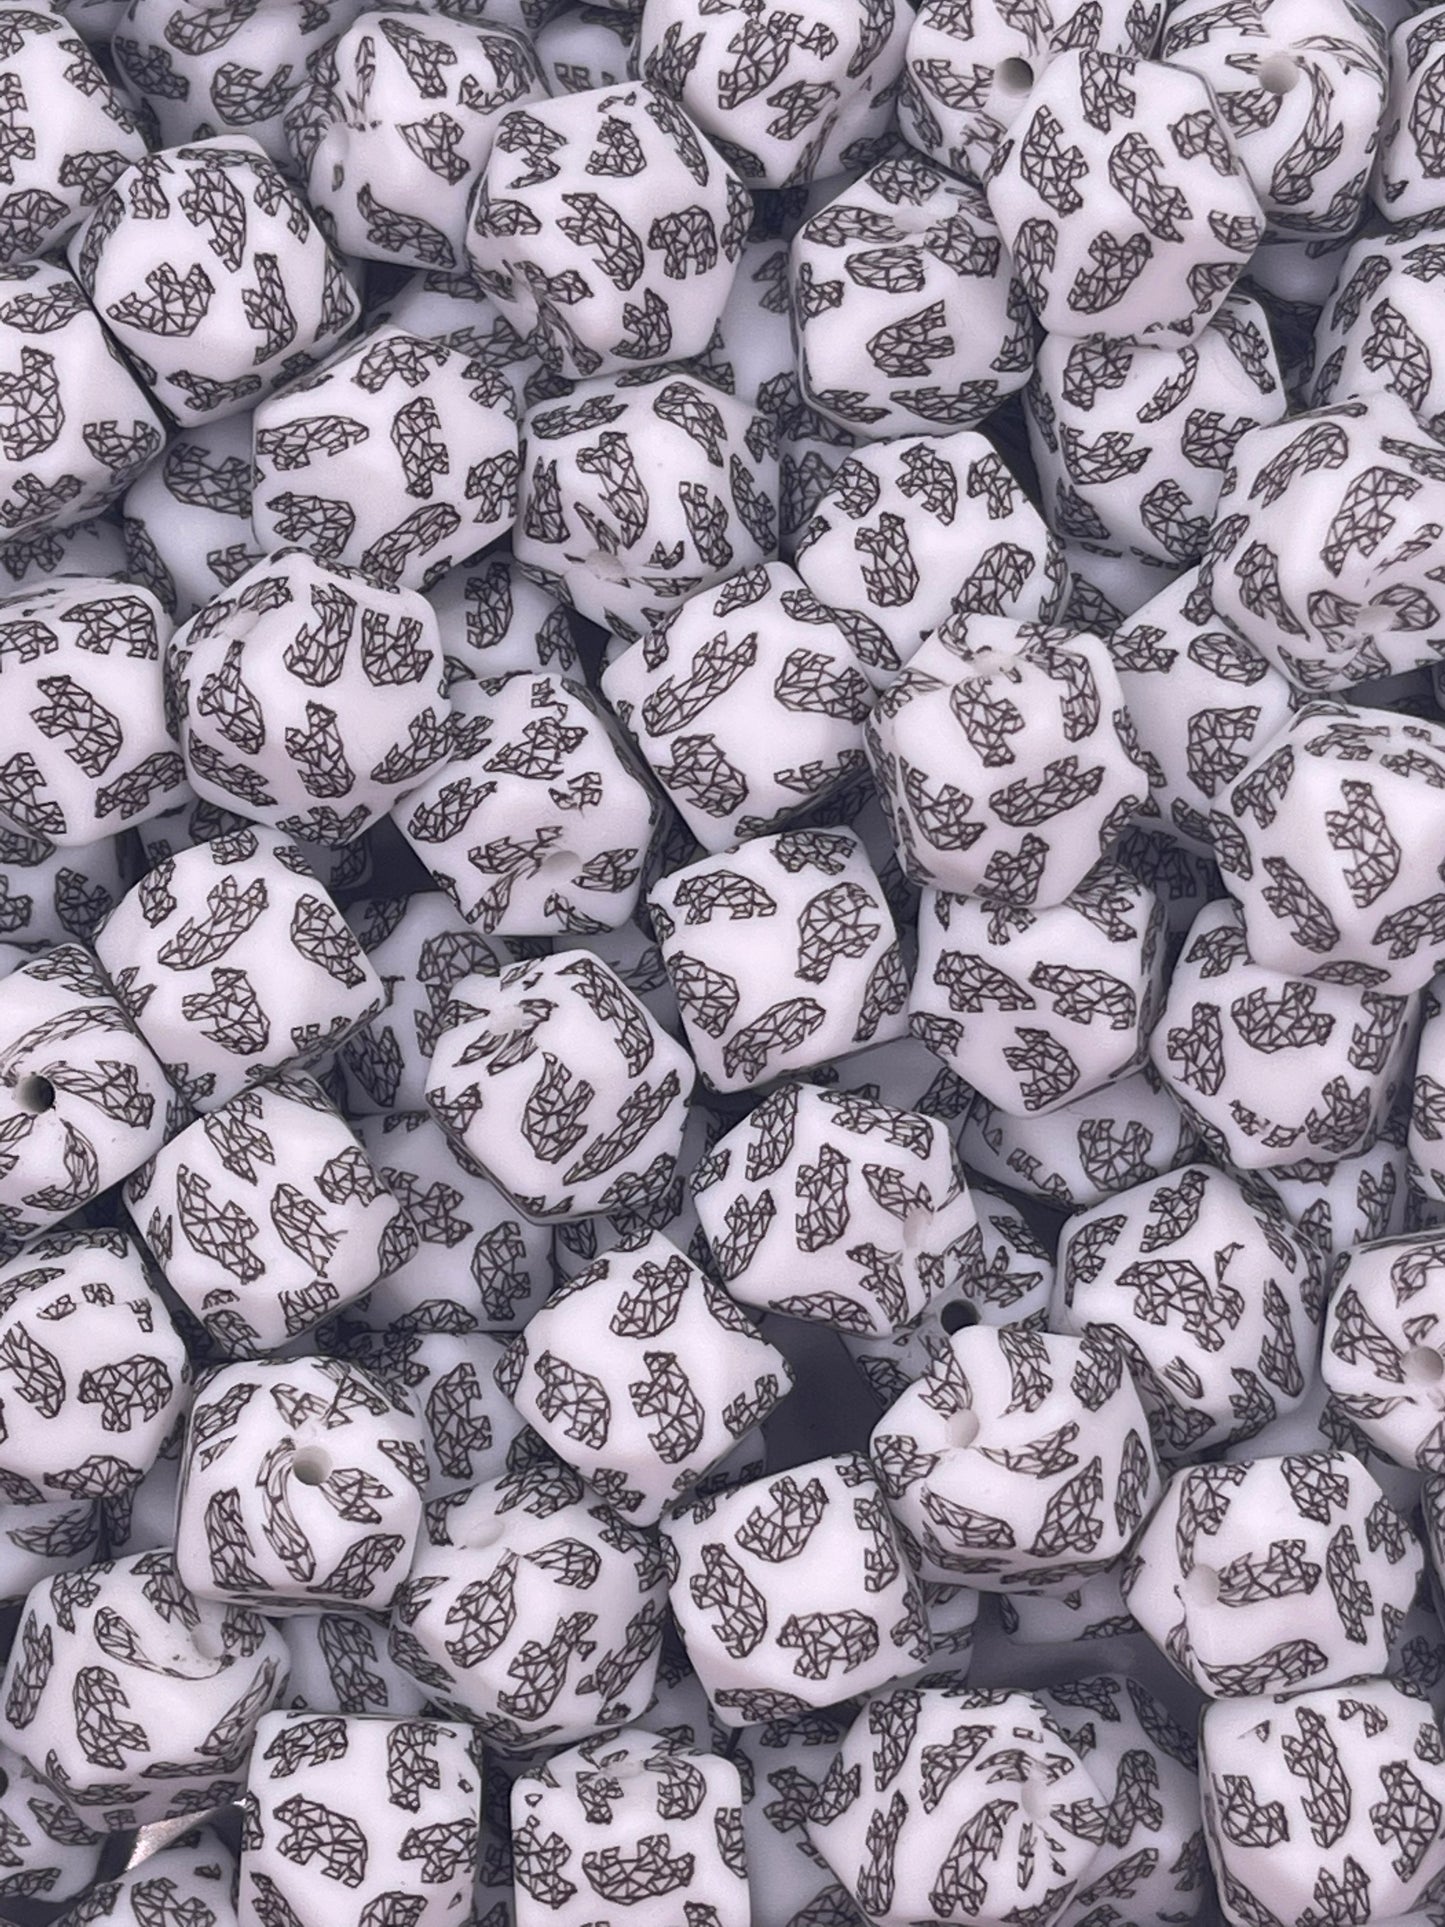 Bear Printed 14mm Hexagon Bead